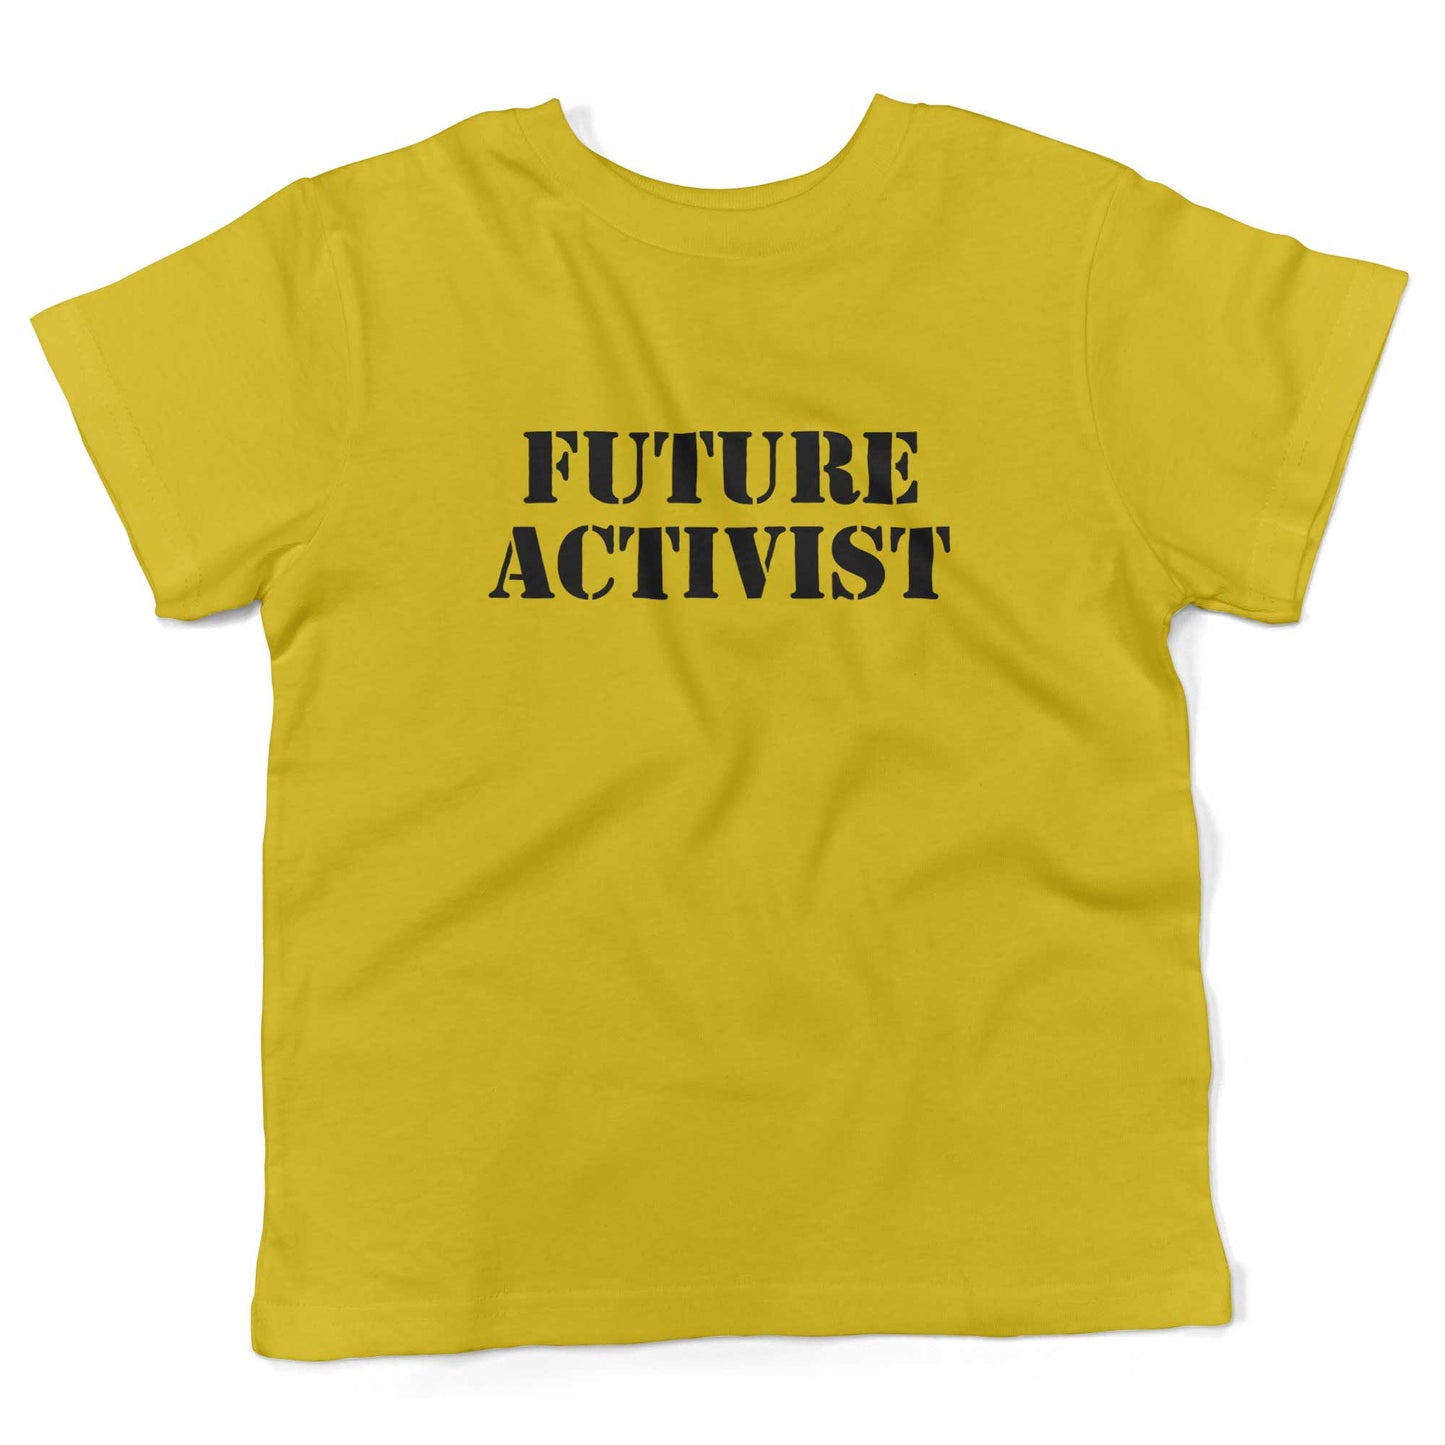 Future Activist Toddler Shirt-Sunshine Yellow-2T